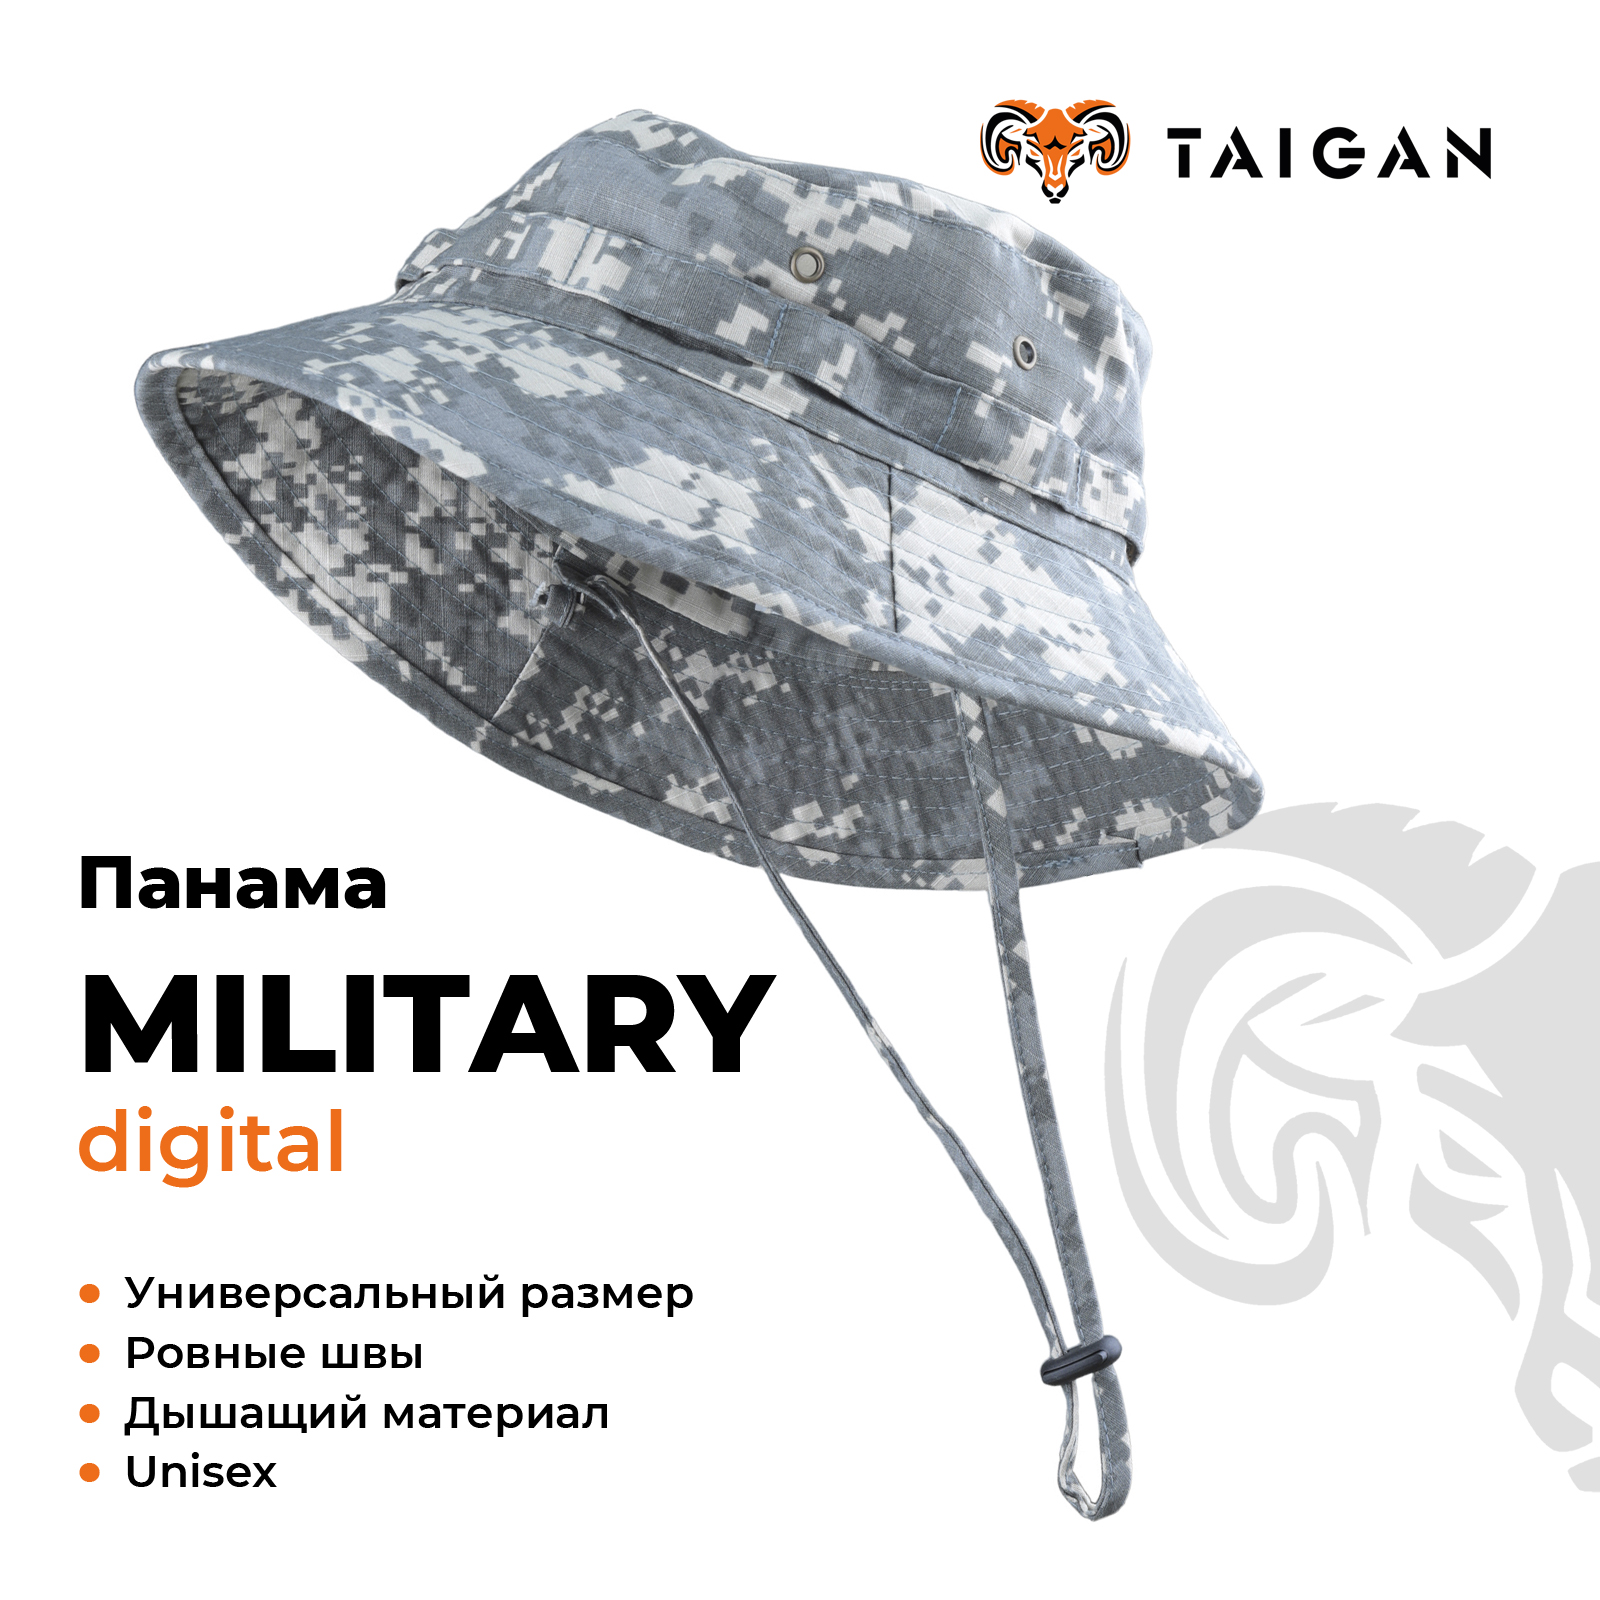 Панама Taigan Military digital - фото 1